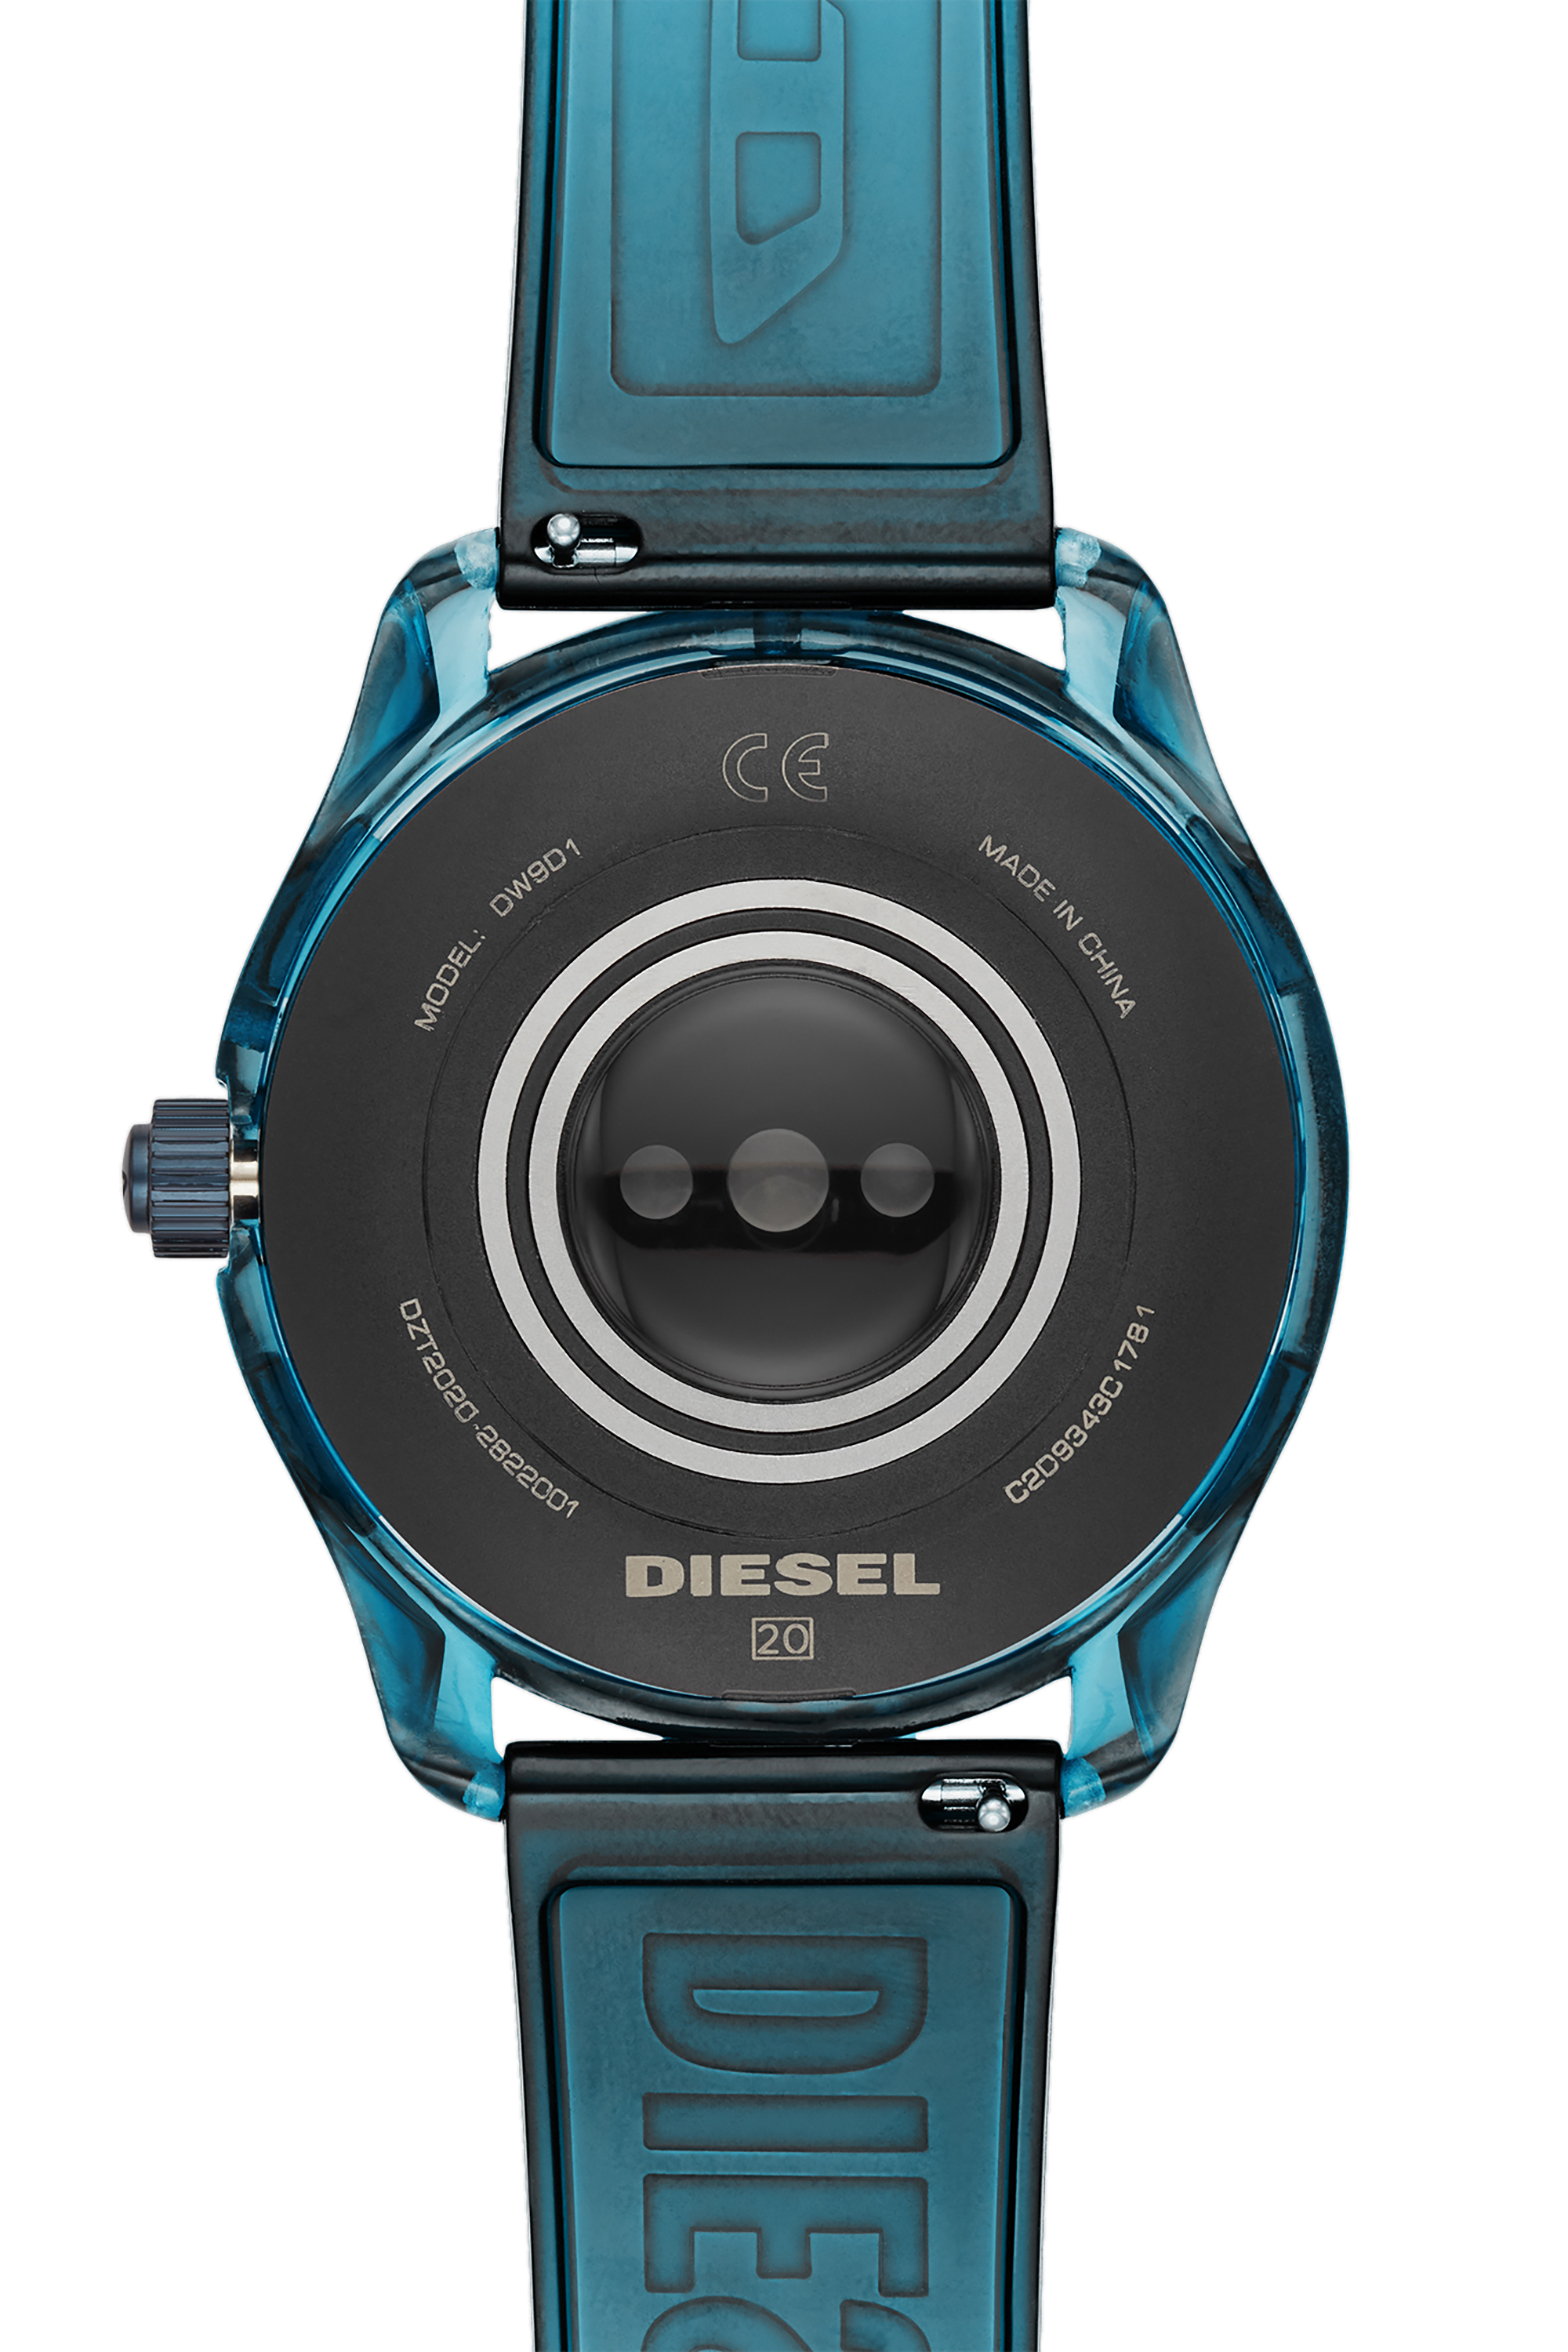 Diesel - DT2020, Blue - Image 4